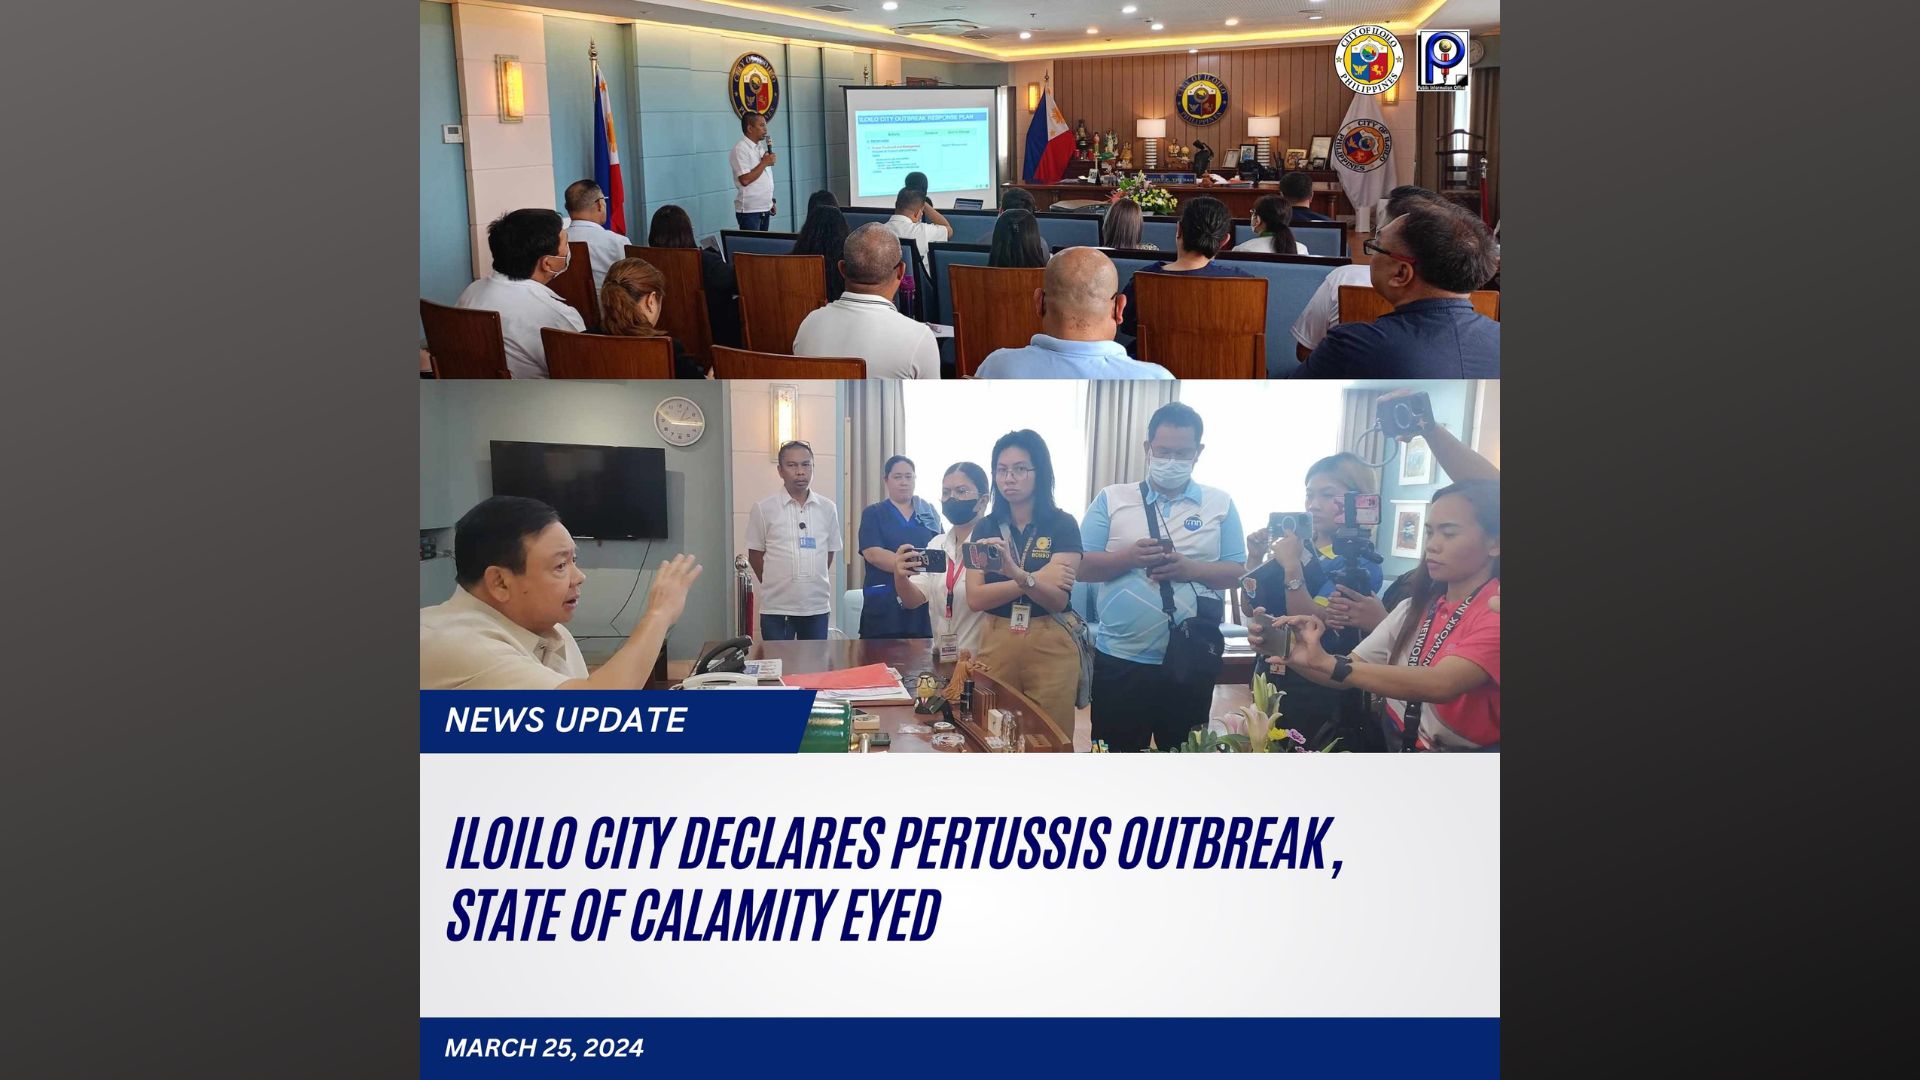 Outbreak ng Pertussis idineklara na rin sa Iloilo City